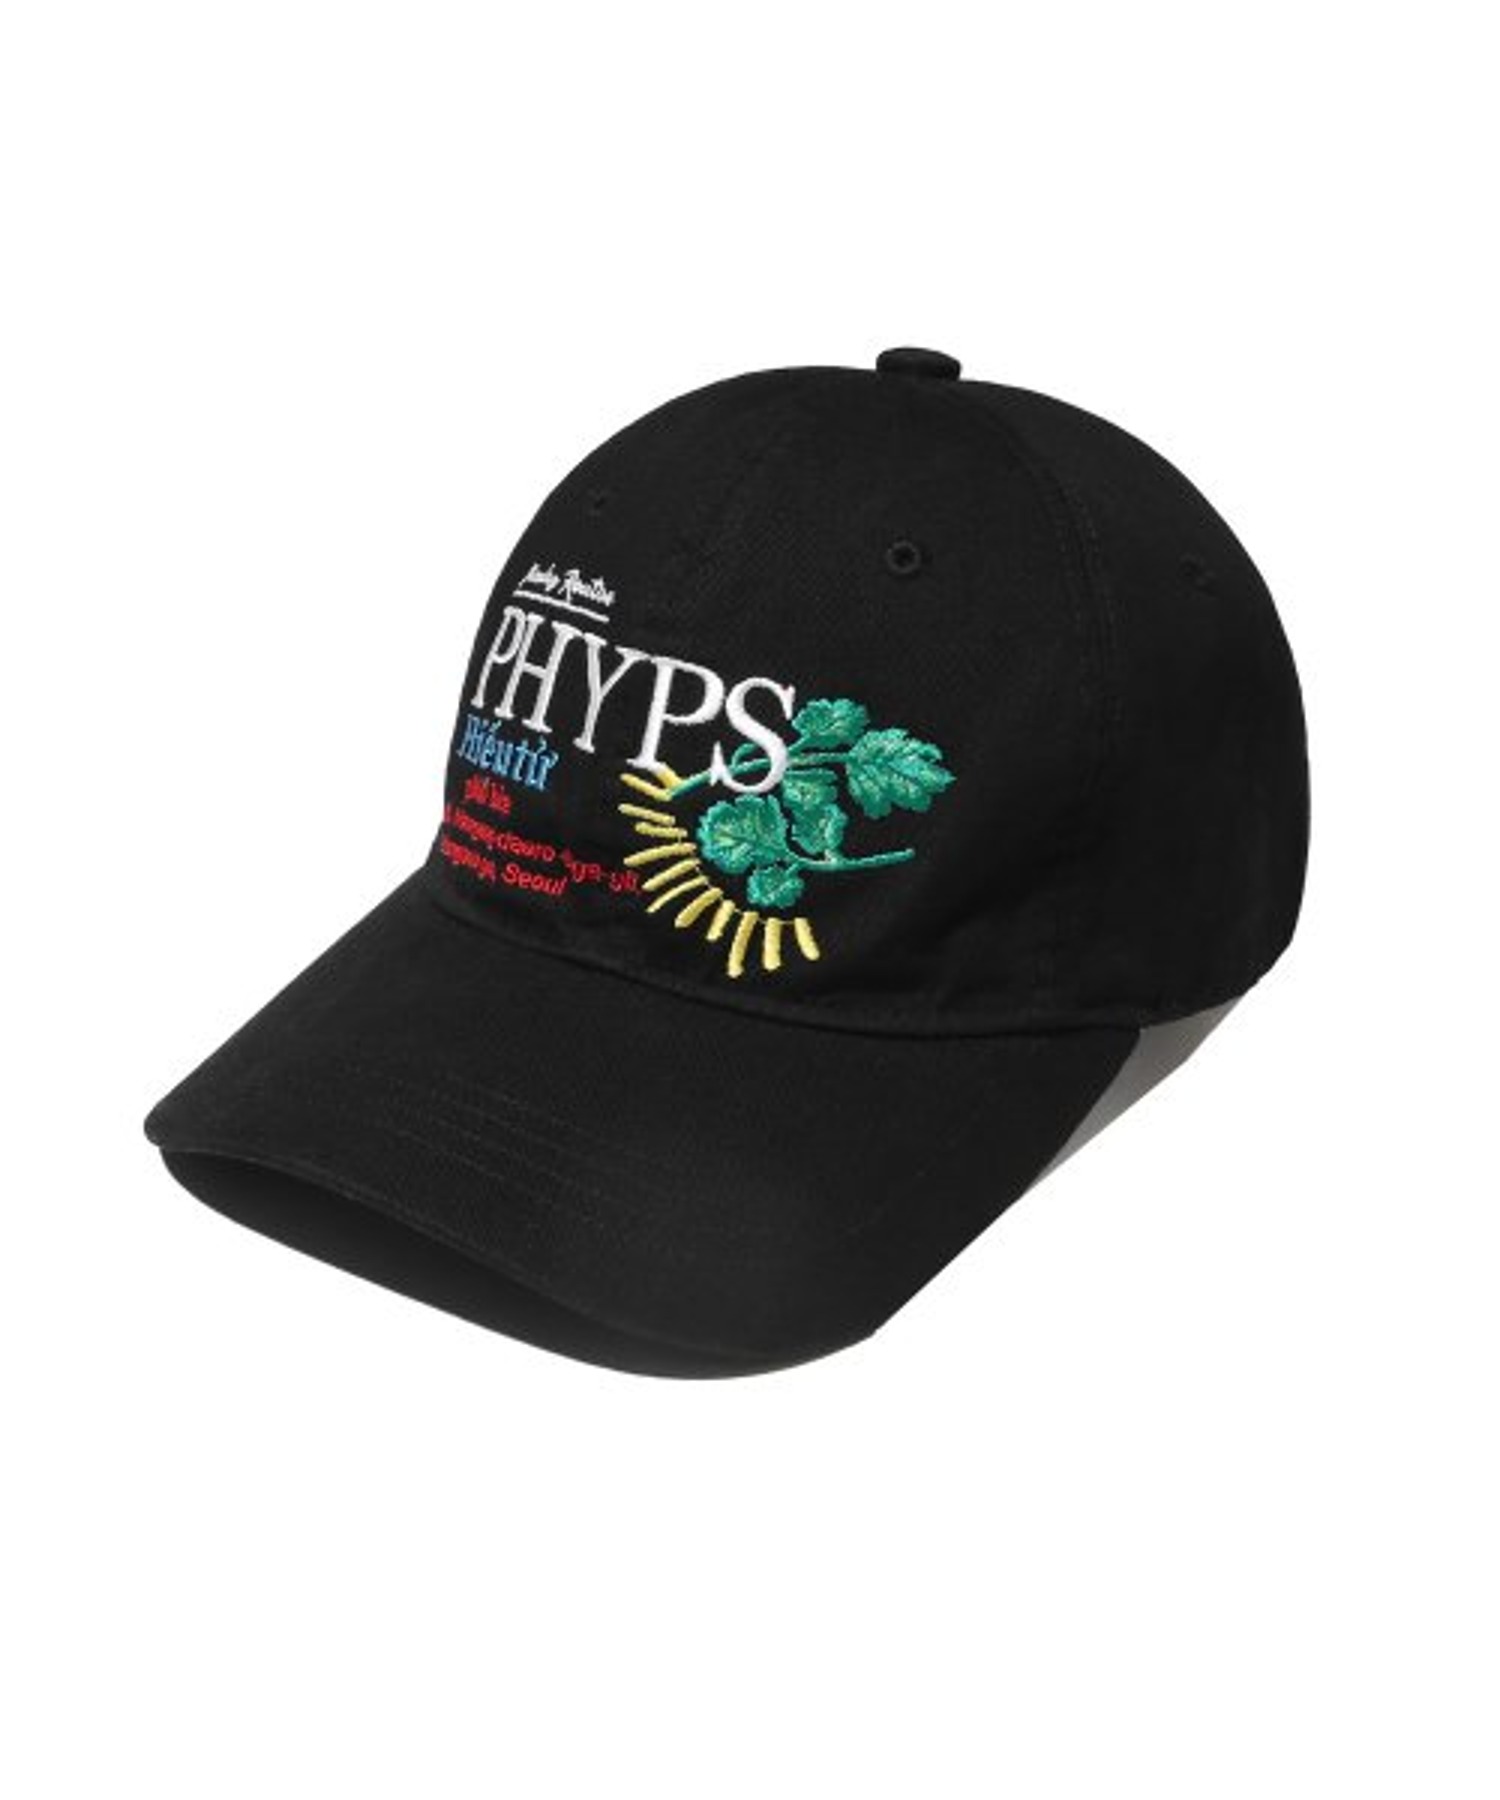 PHYPS® X HIEUTU CILANTRO CAP BLACK